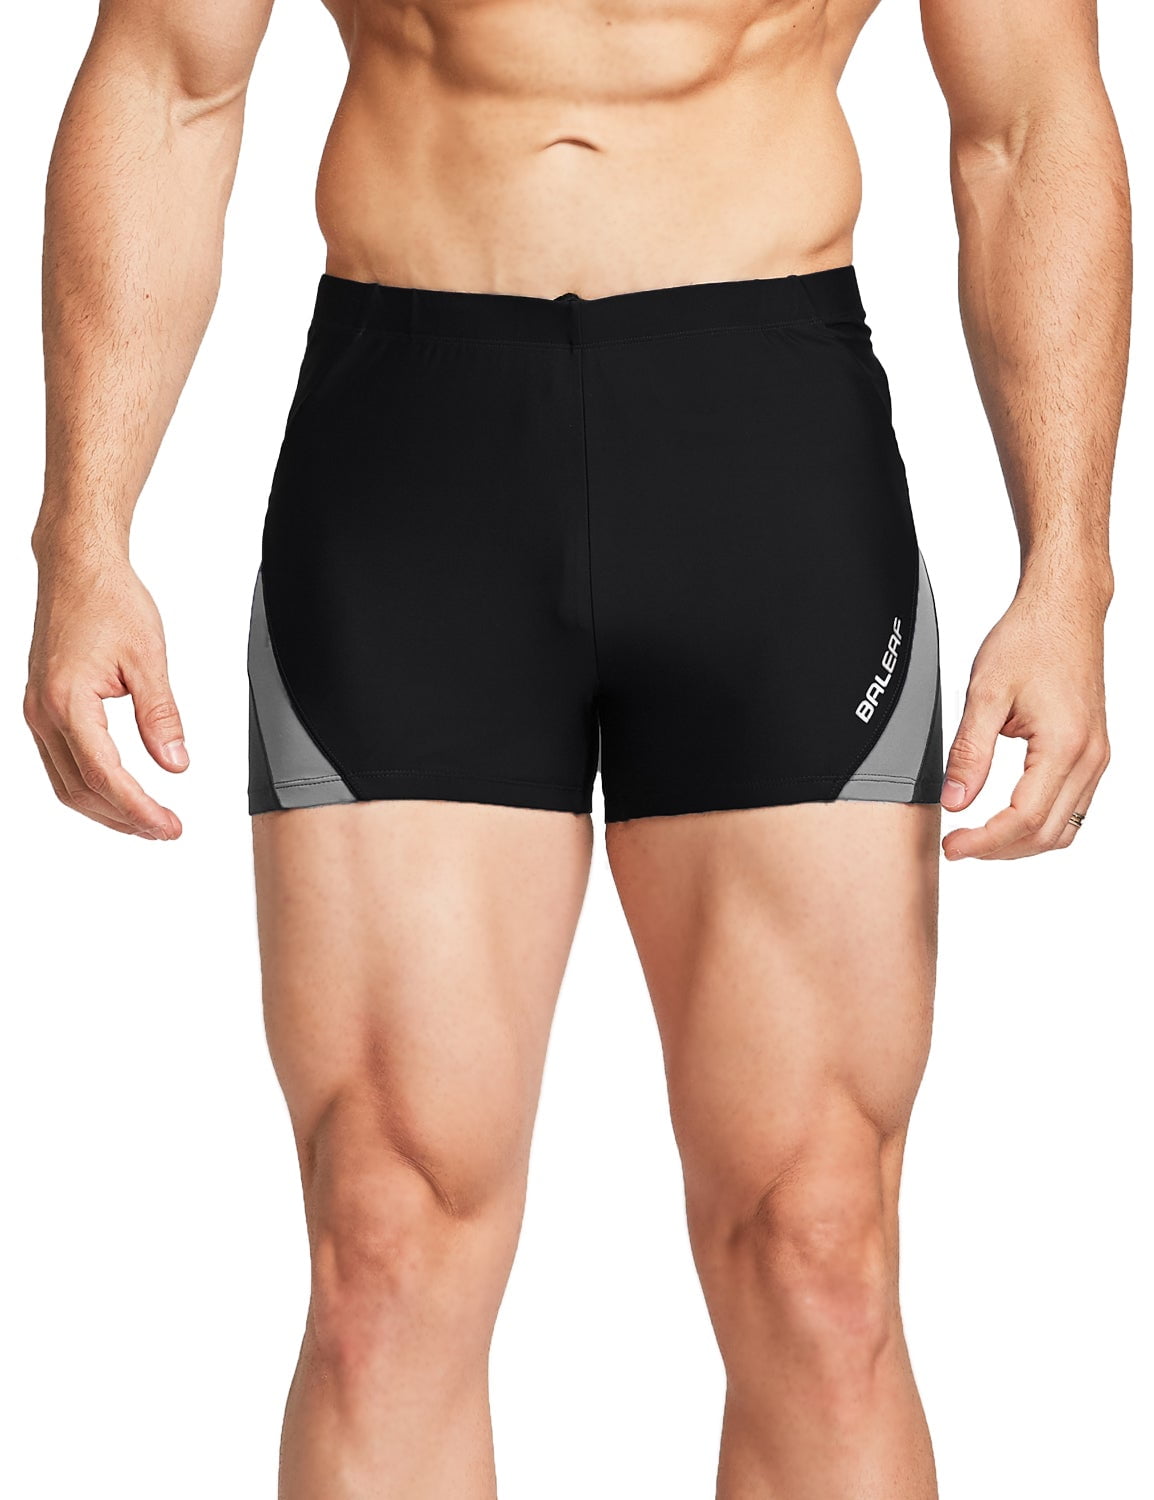 BALEAF Mens Athletic Durable Training Polyester Jammer Swimsuit